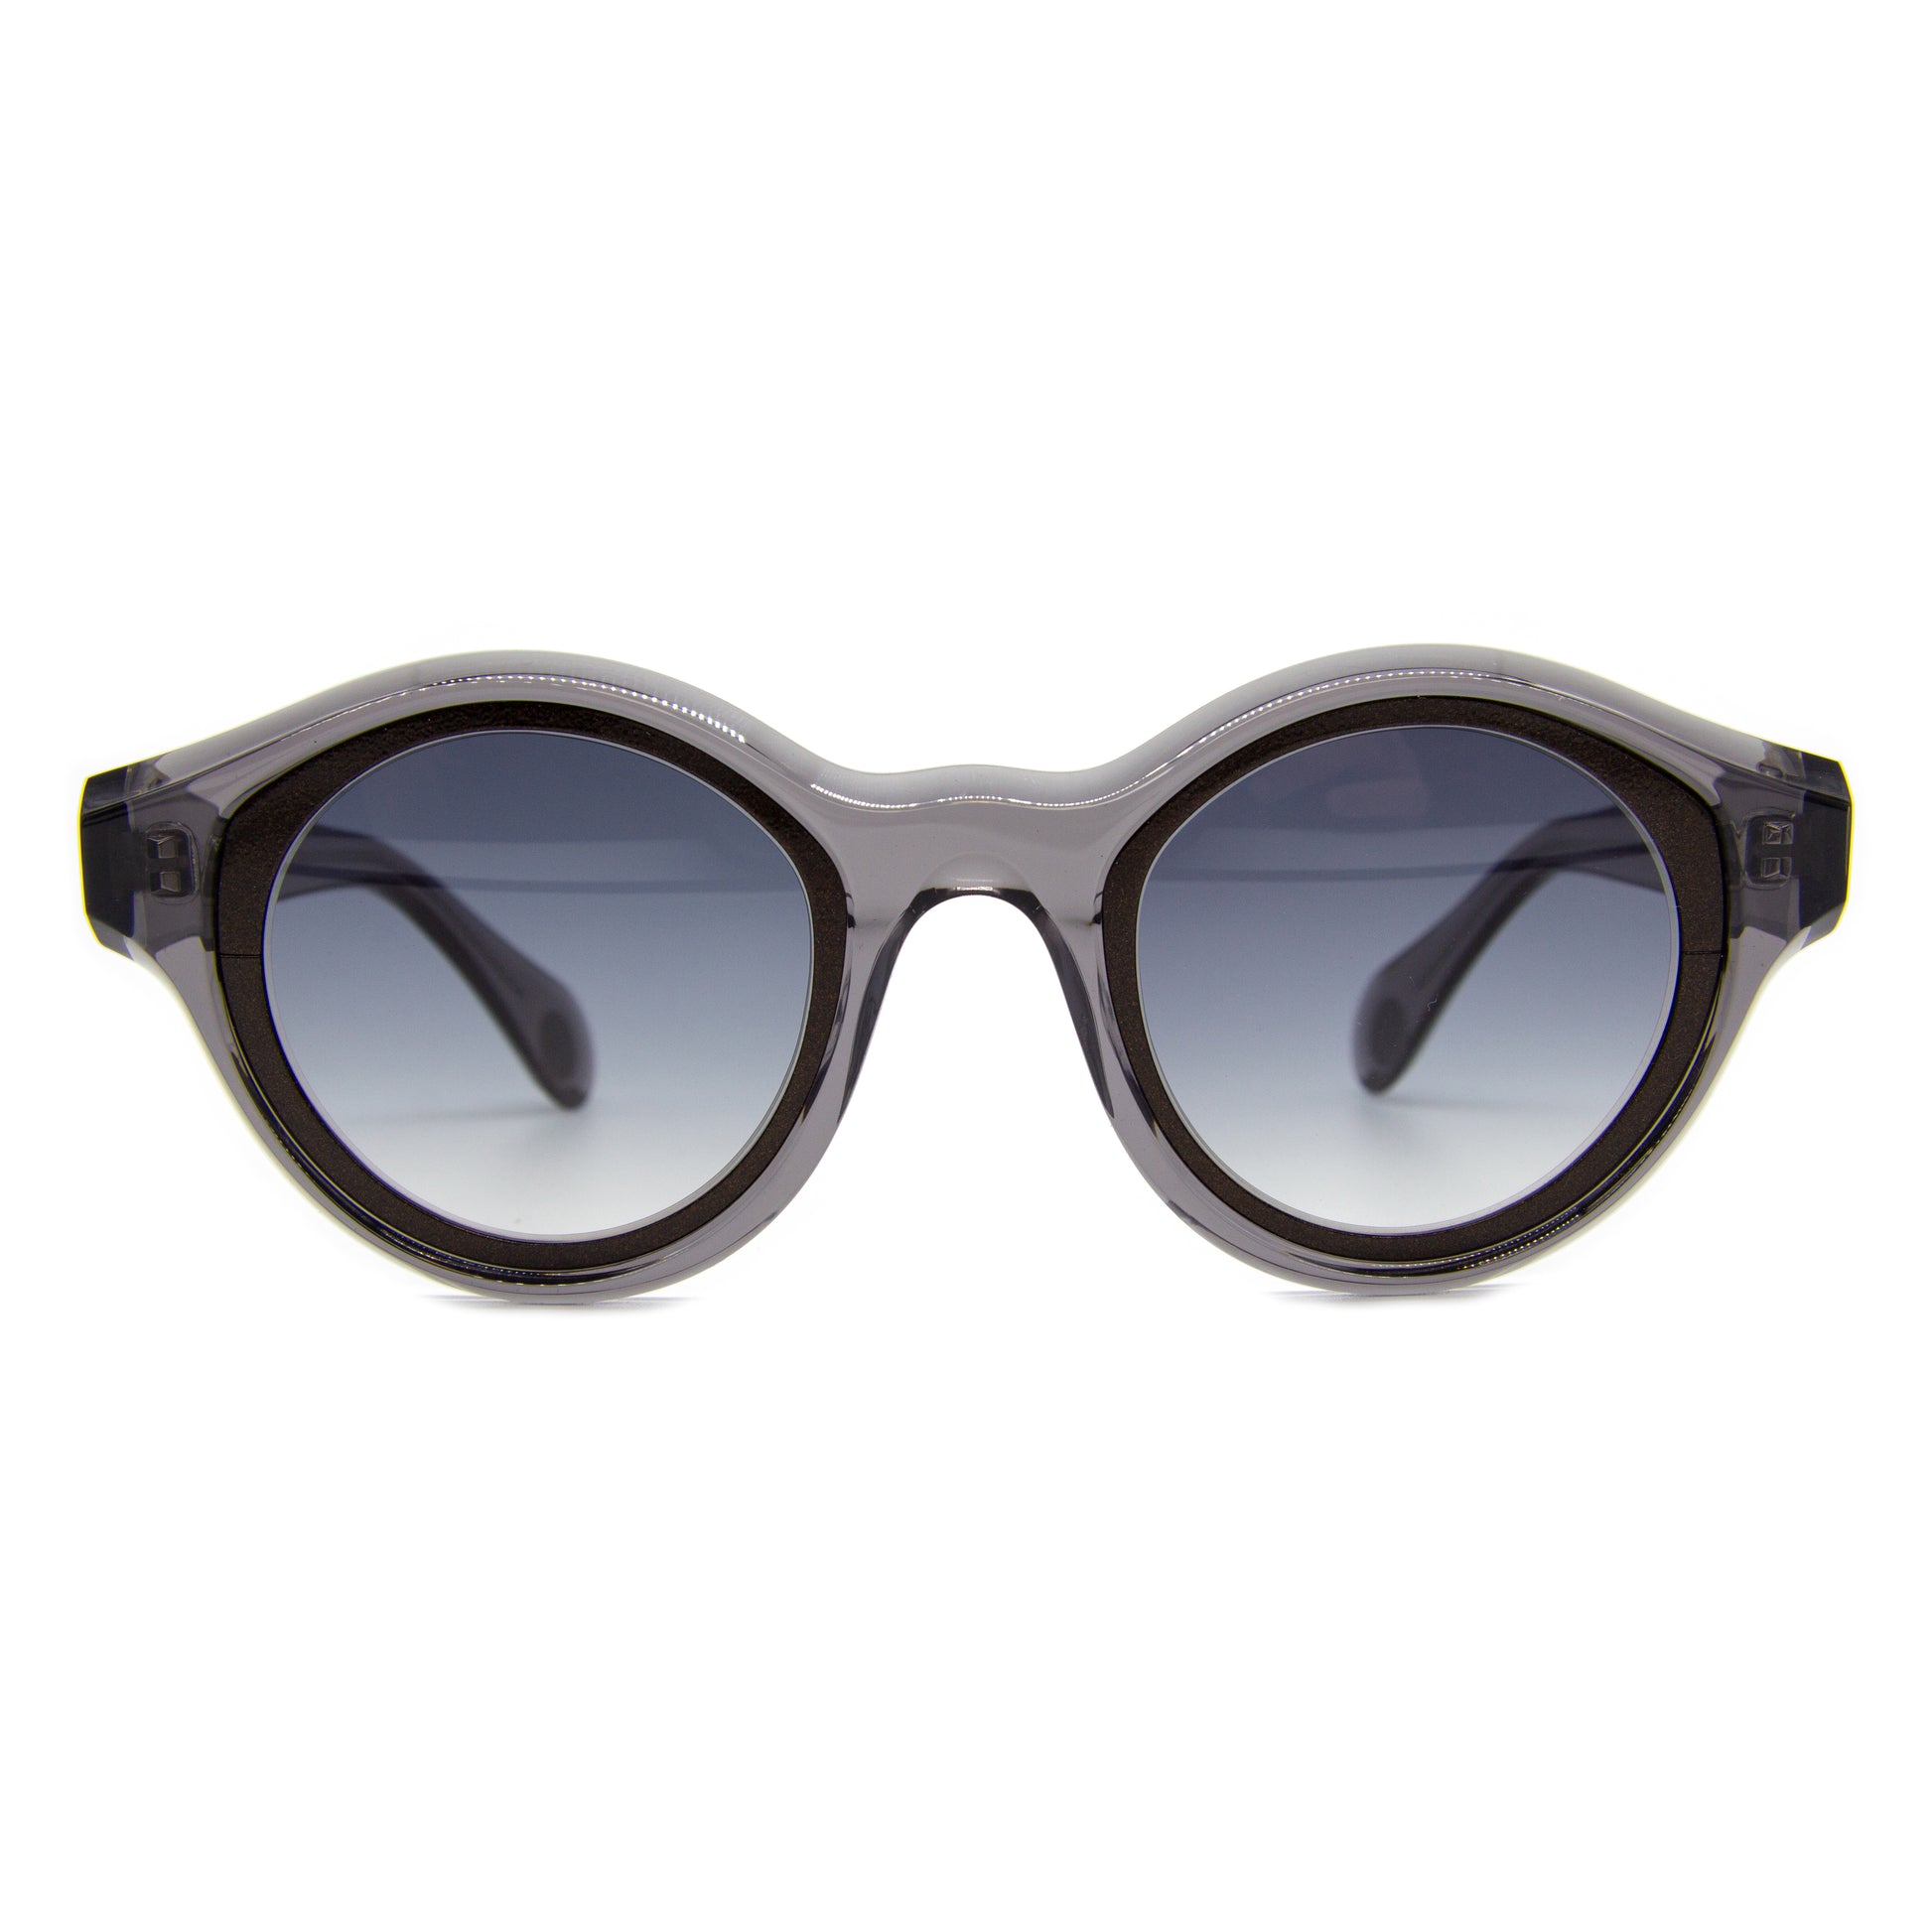 Theo - Eyewear - Mille+94 - 7 - Sunglasses